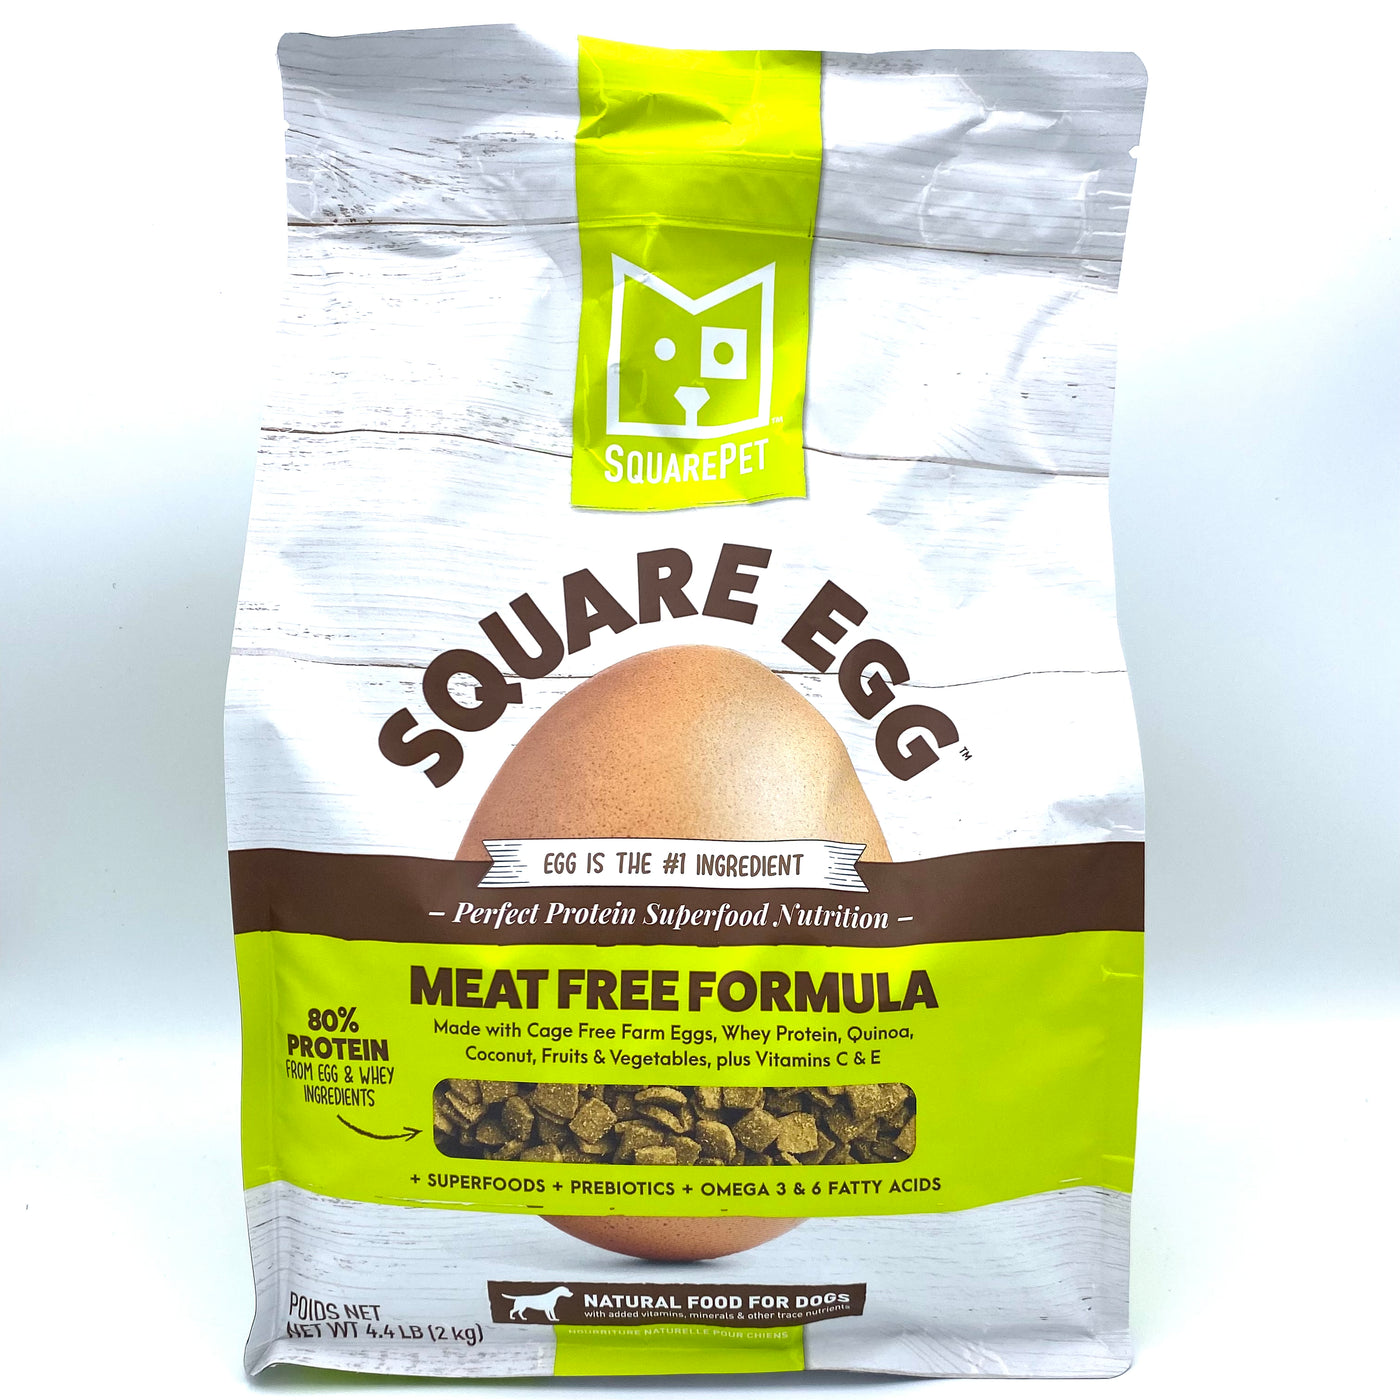 Square Egg Dog Food 4.4lb